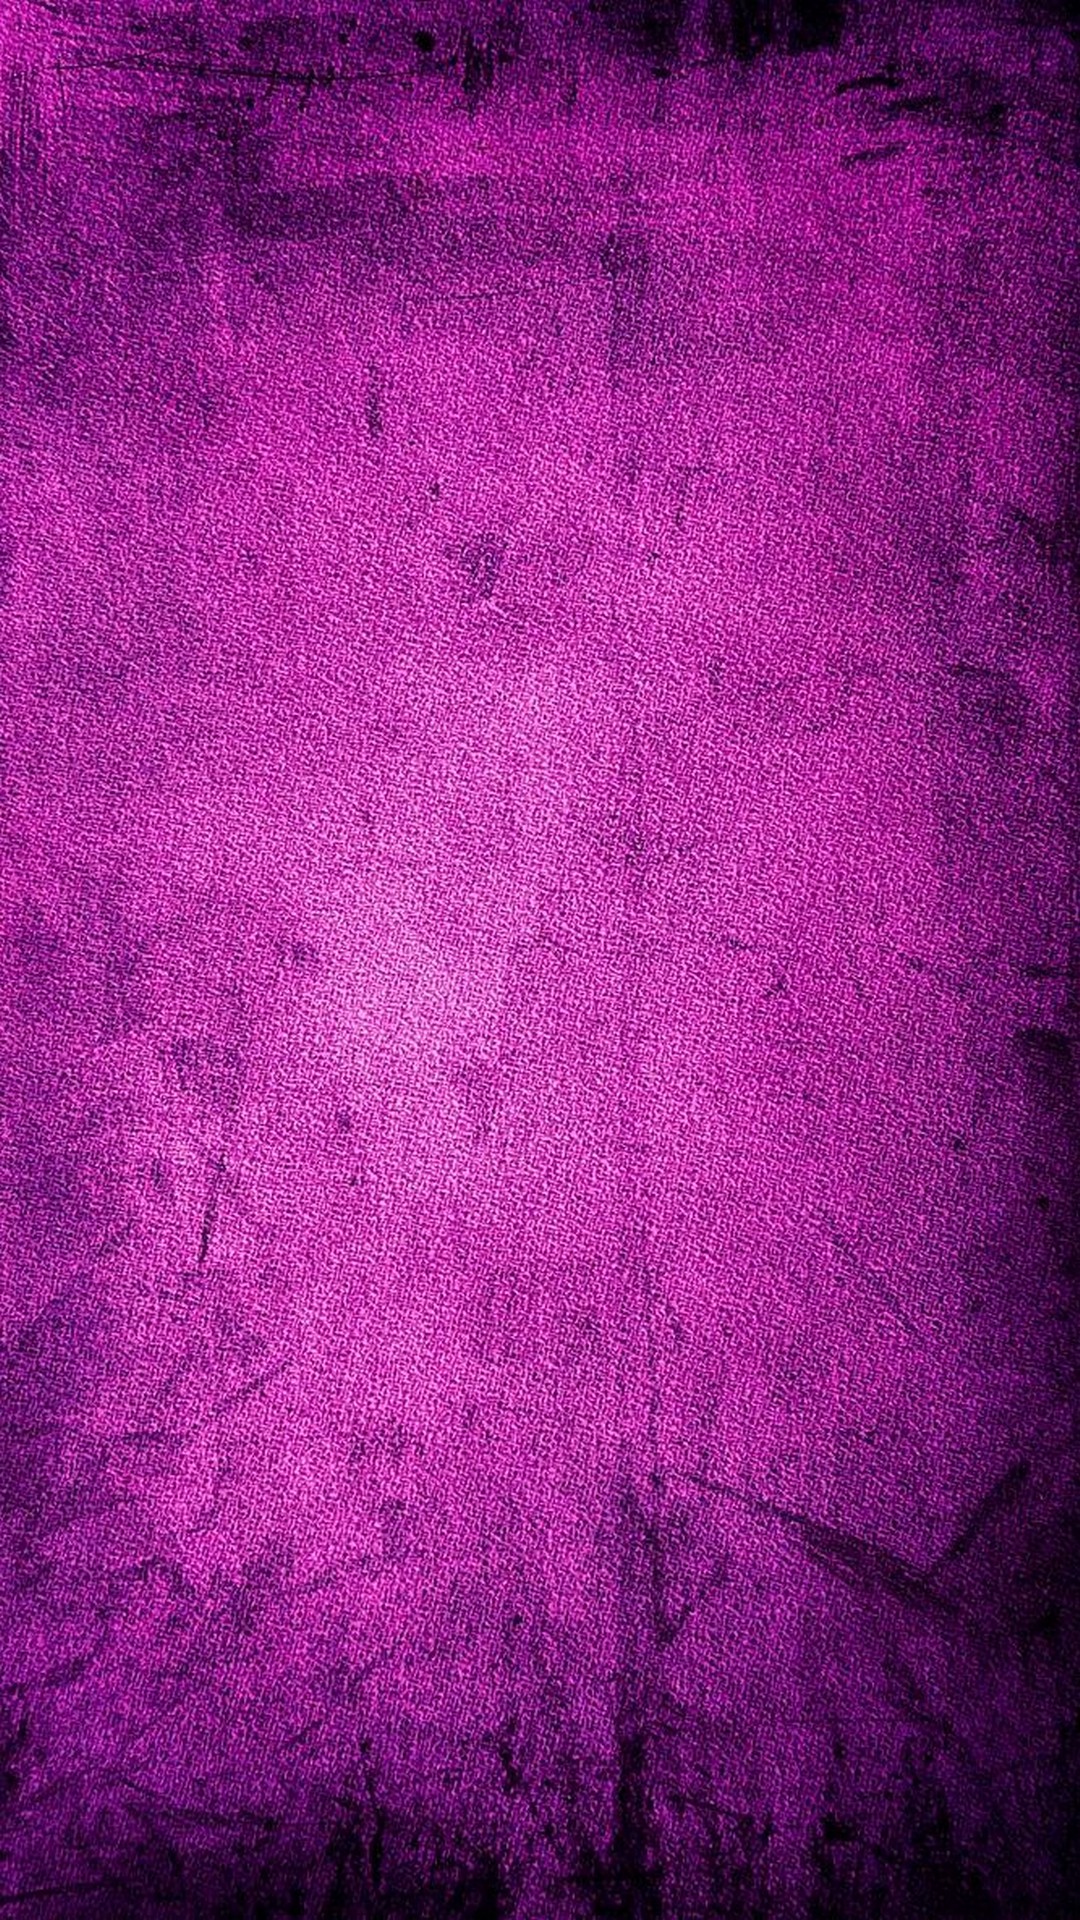 Purple Vintage Fabric iPhone Wallpaper